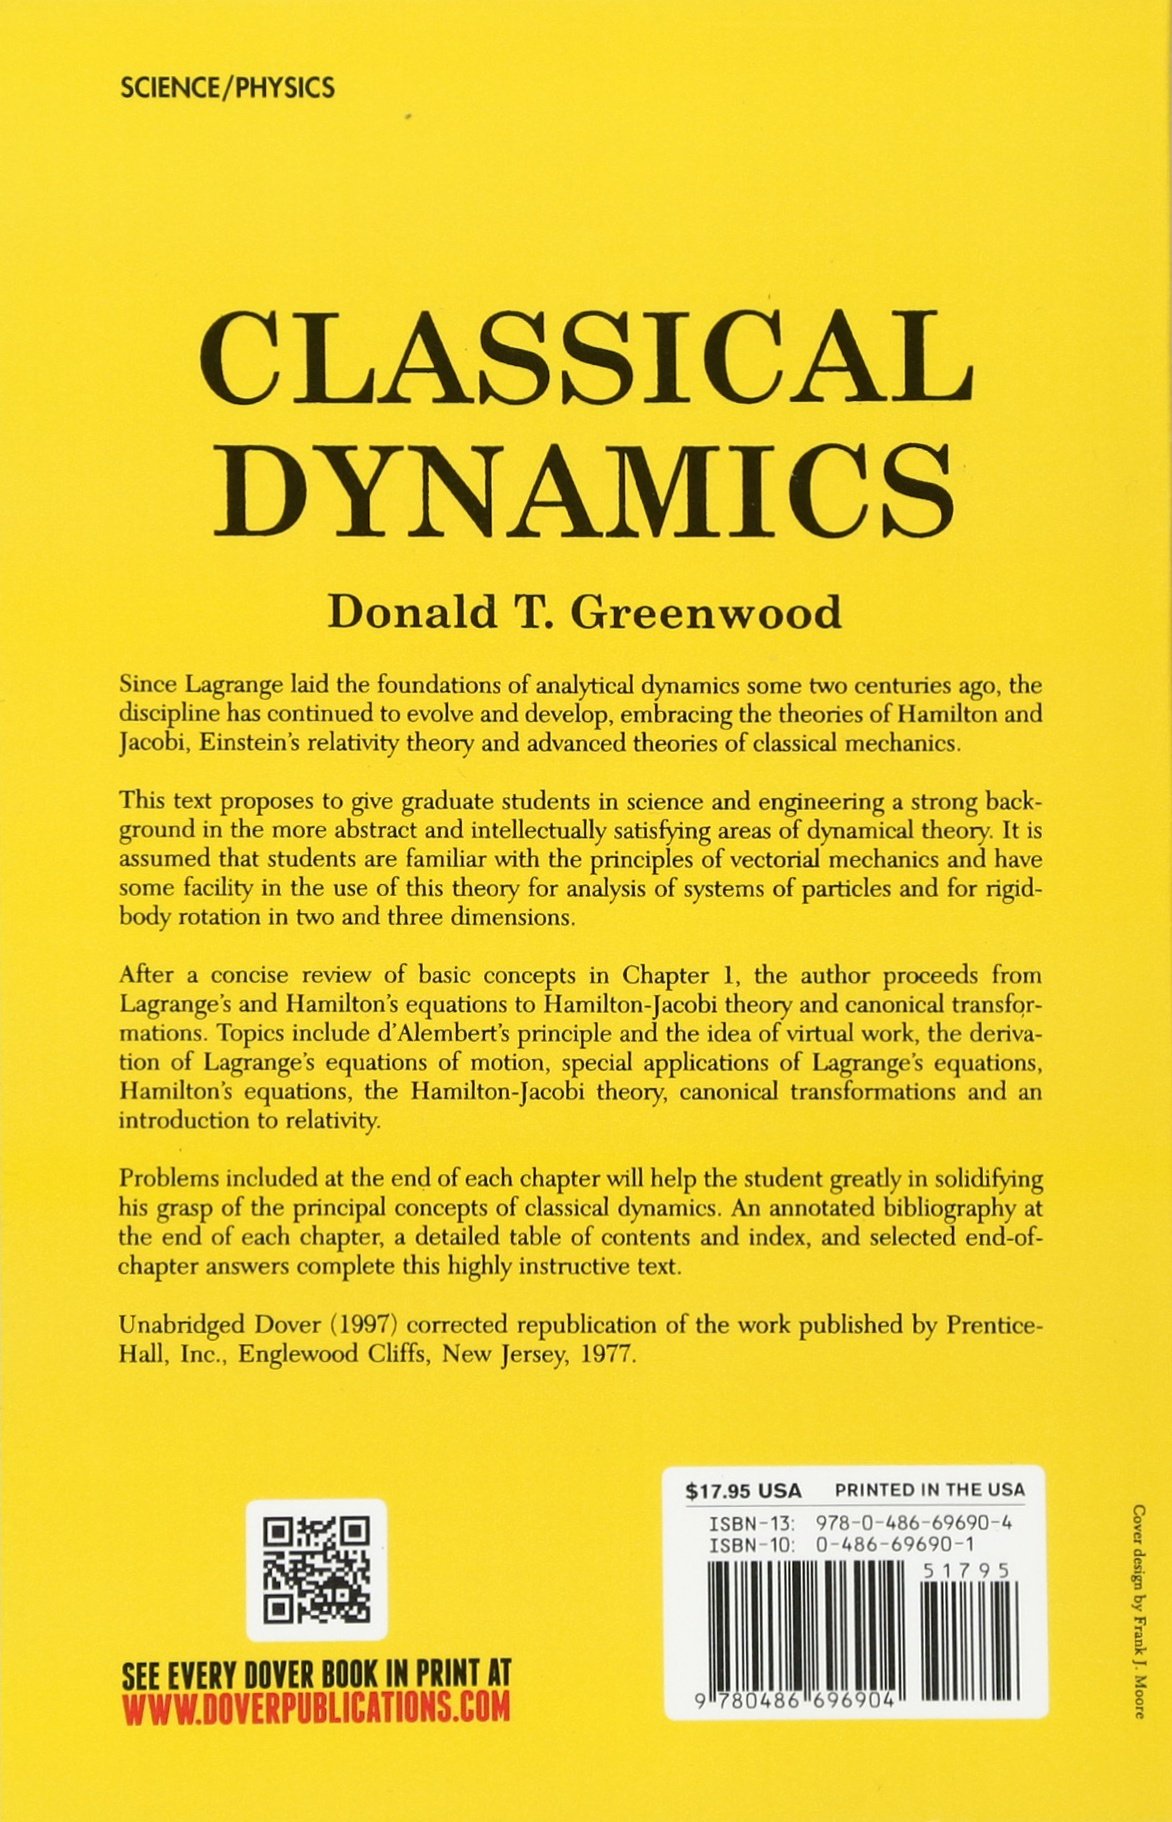 classical dynamics greenwood pdf free download